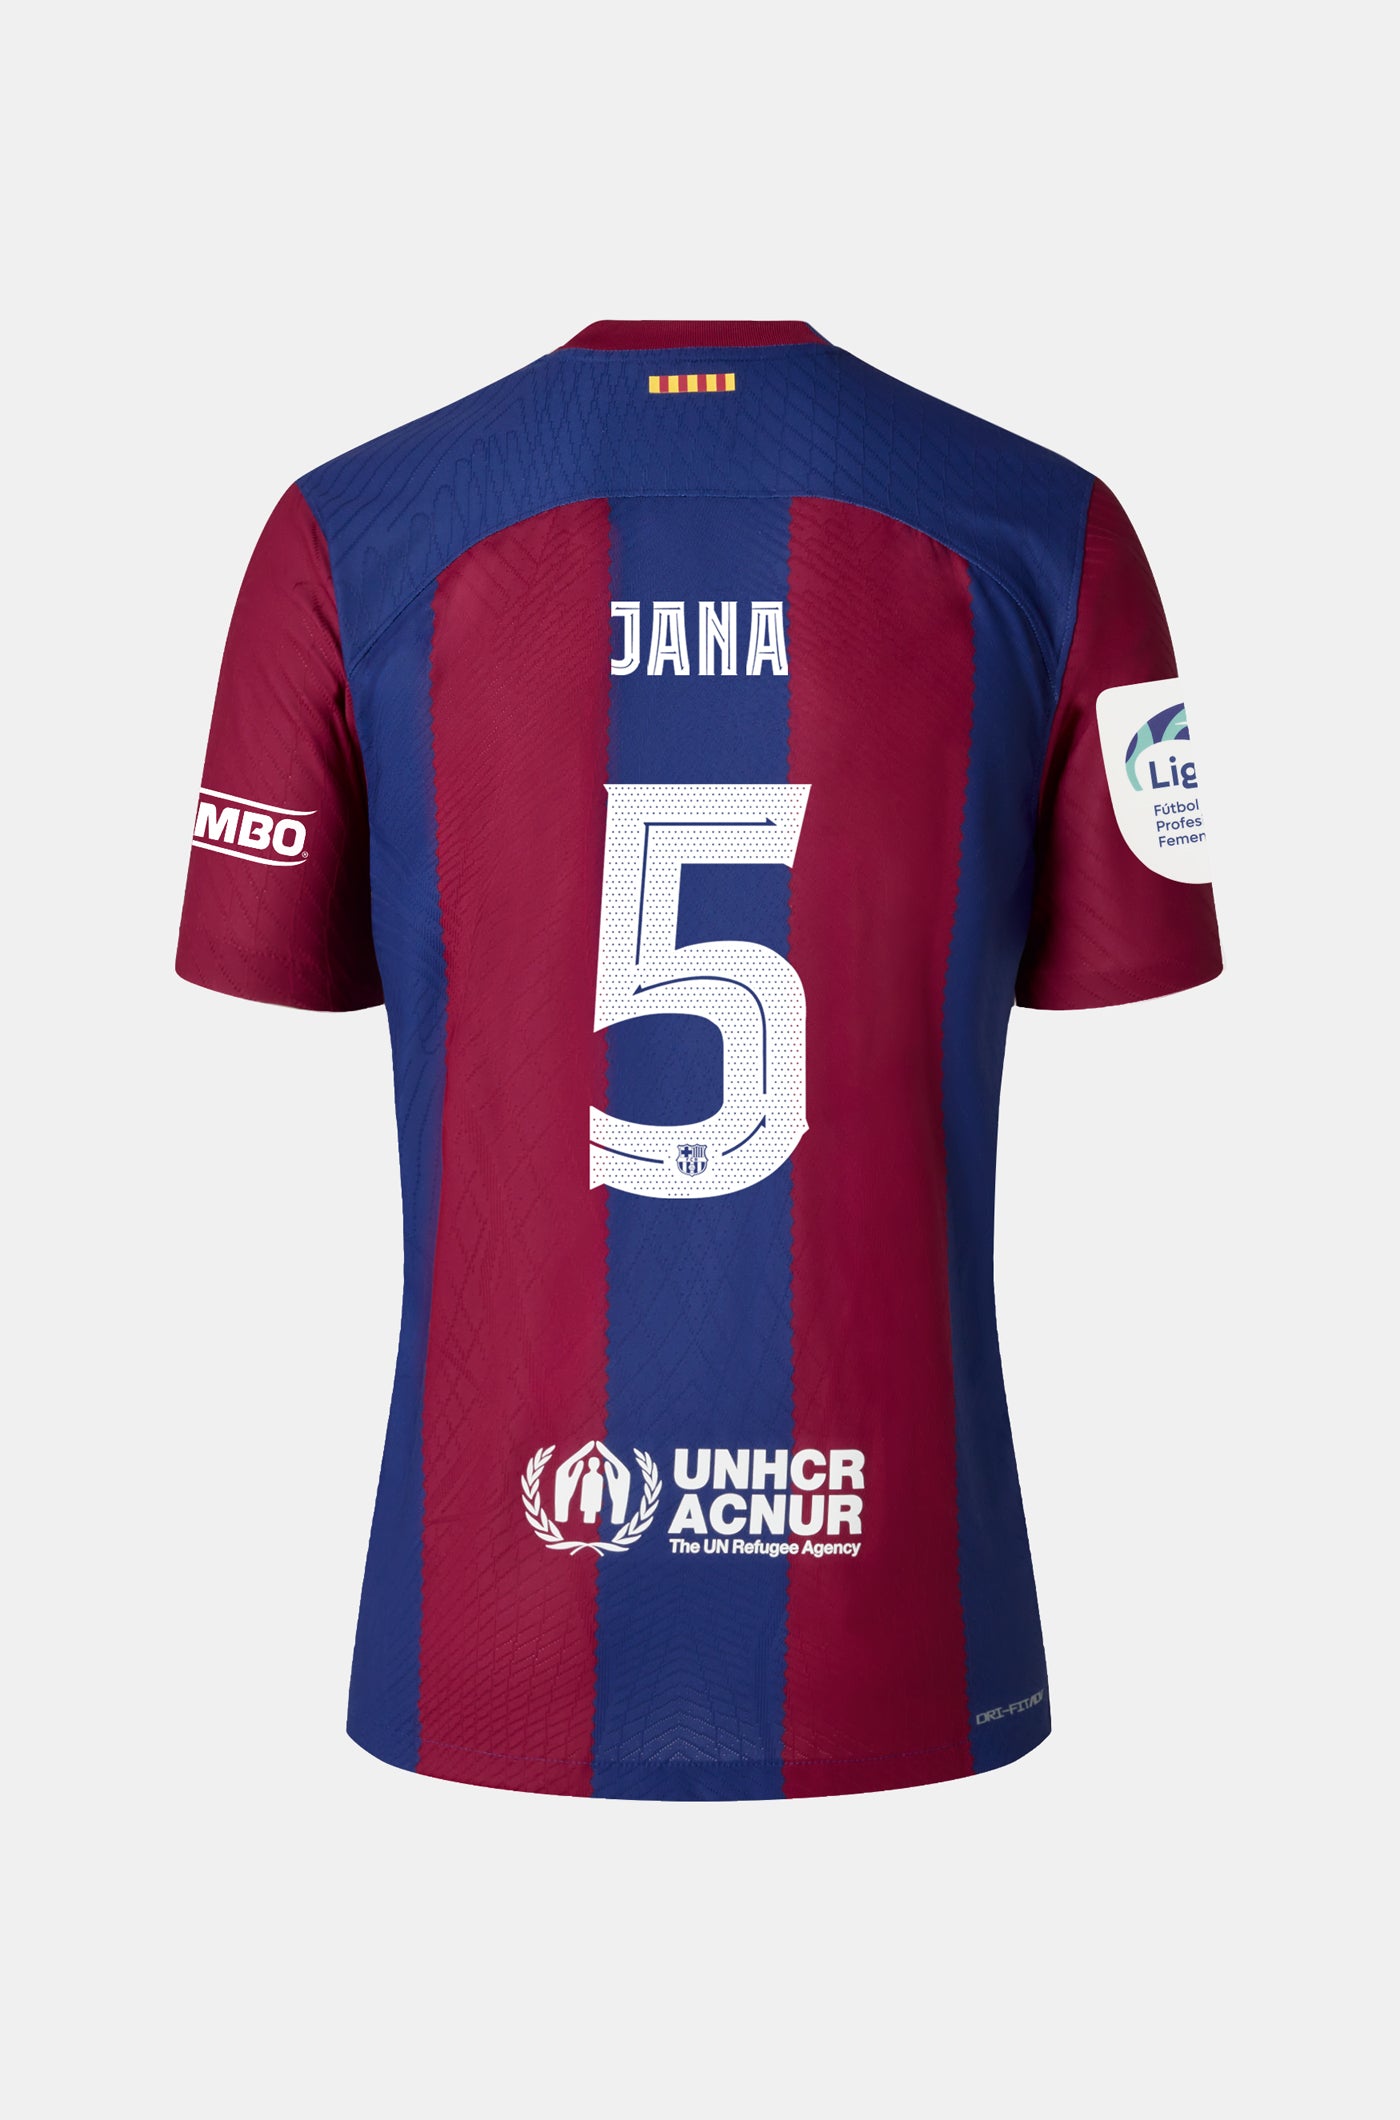 Liga F FC Barcelona home shirt 23/24 - Junior - JANA